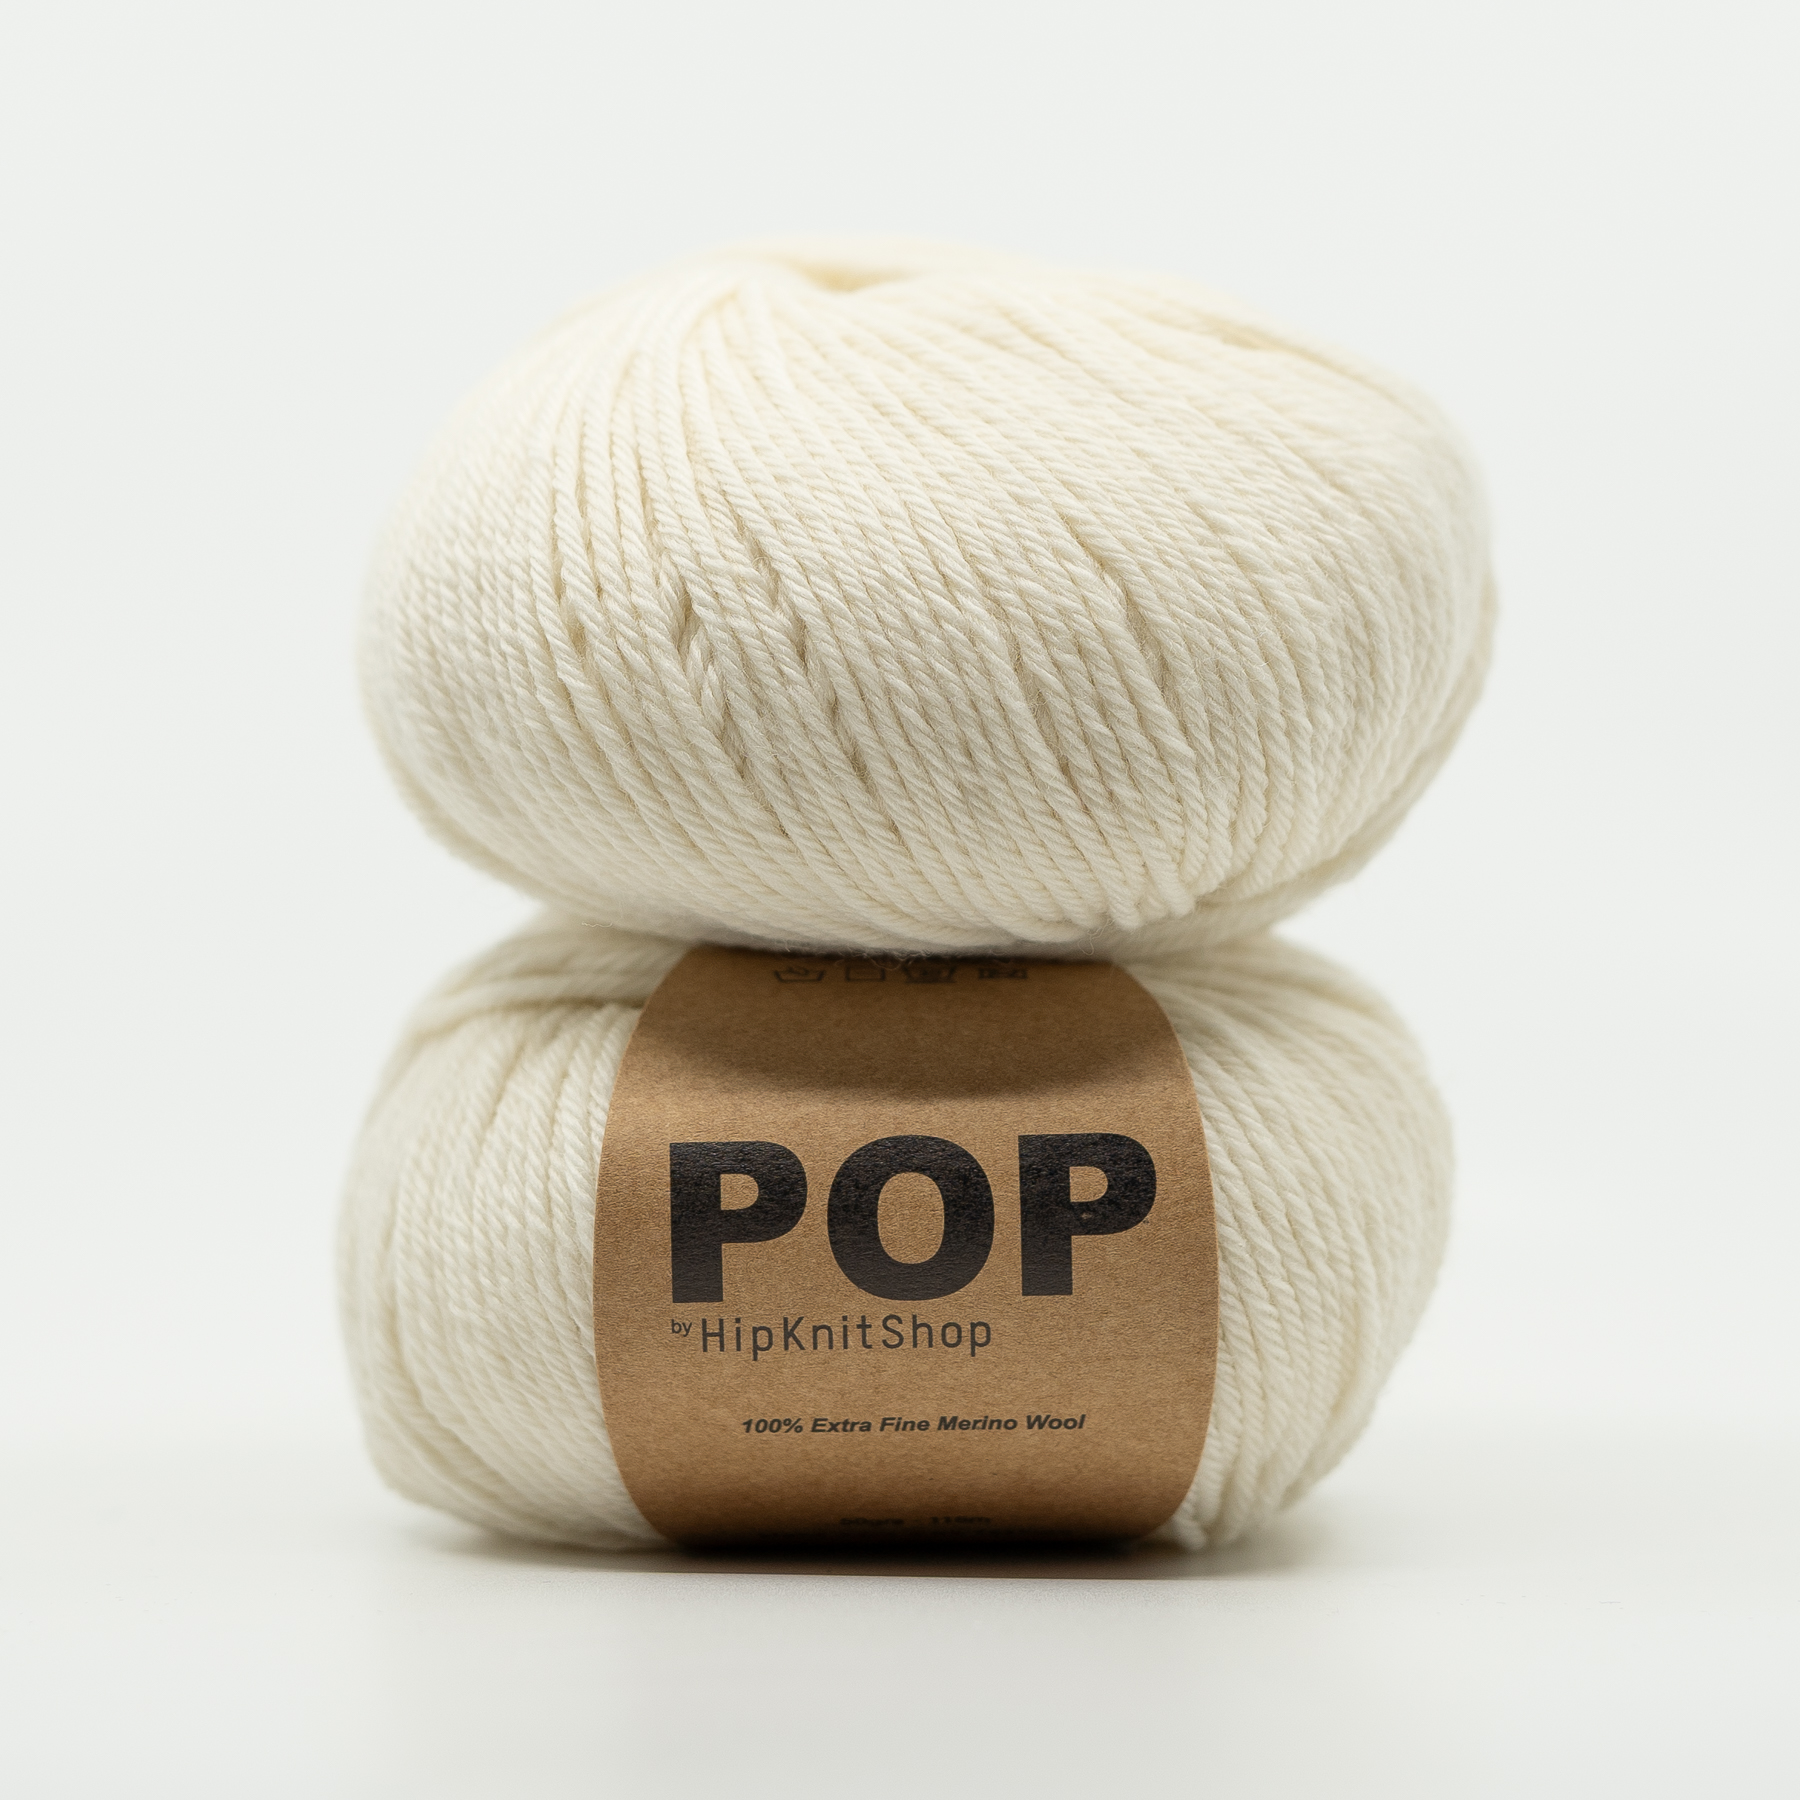  - Coconut white | Pop merino | Natural white wool yarn - by HipKnitShop - 26/04/2021